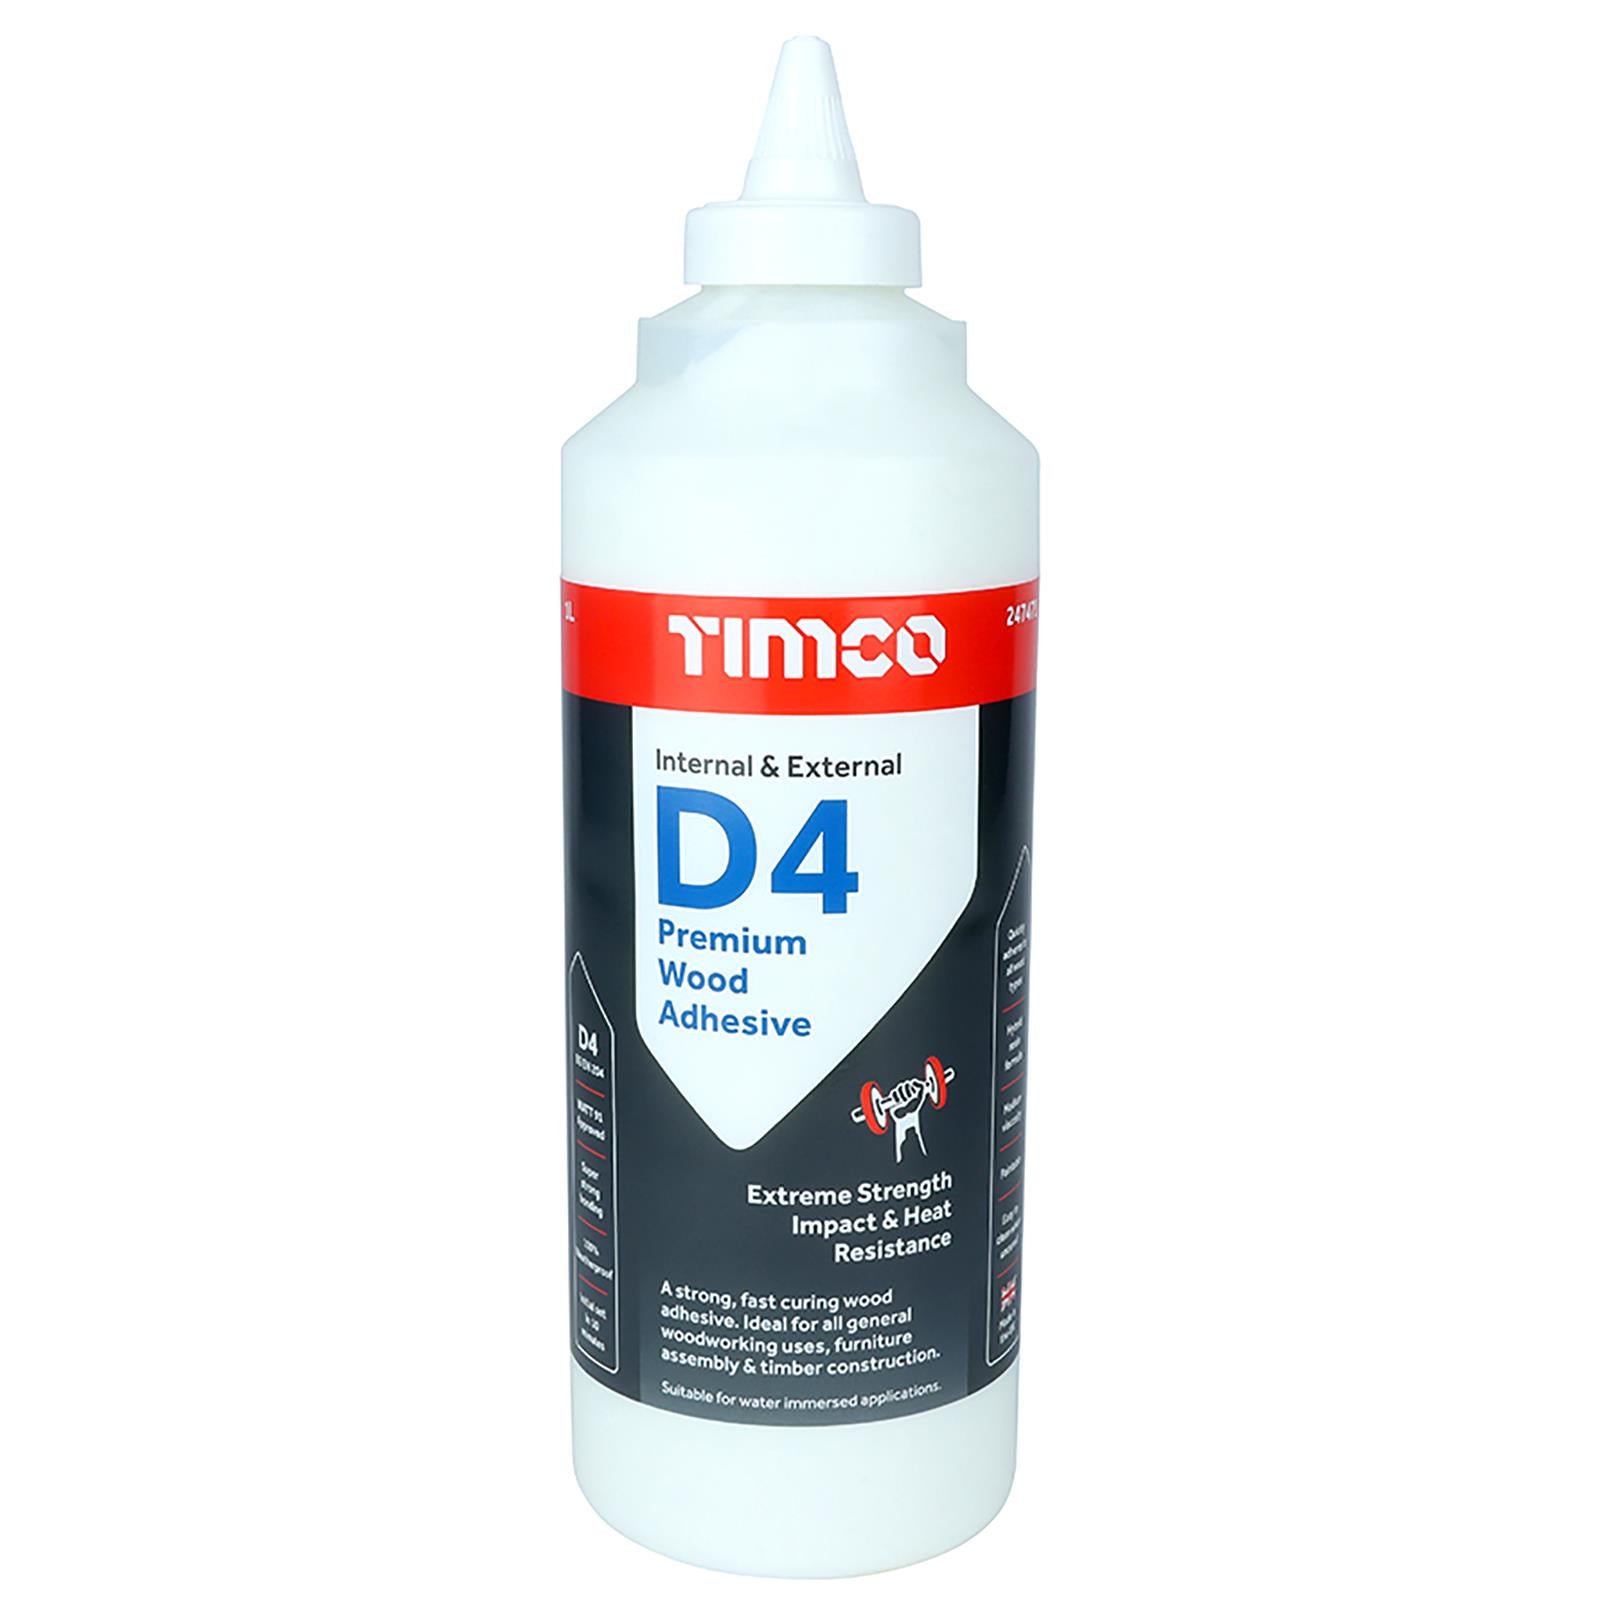 TIMCO D4 Premium Wood Adhesive Glue Internal and External 1L